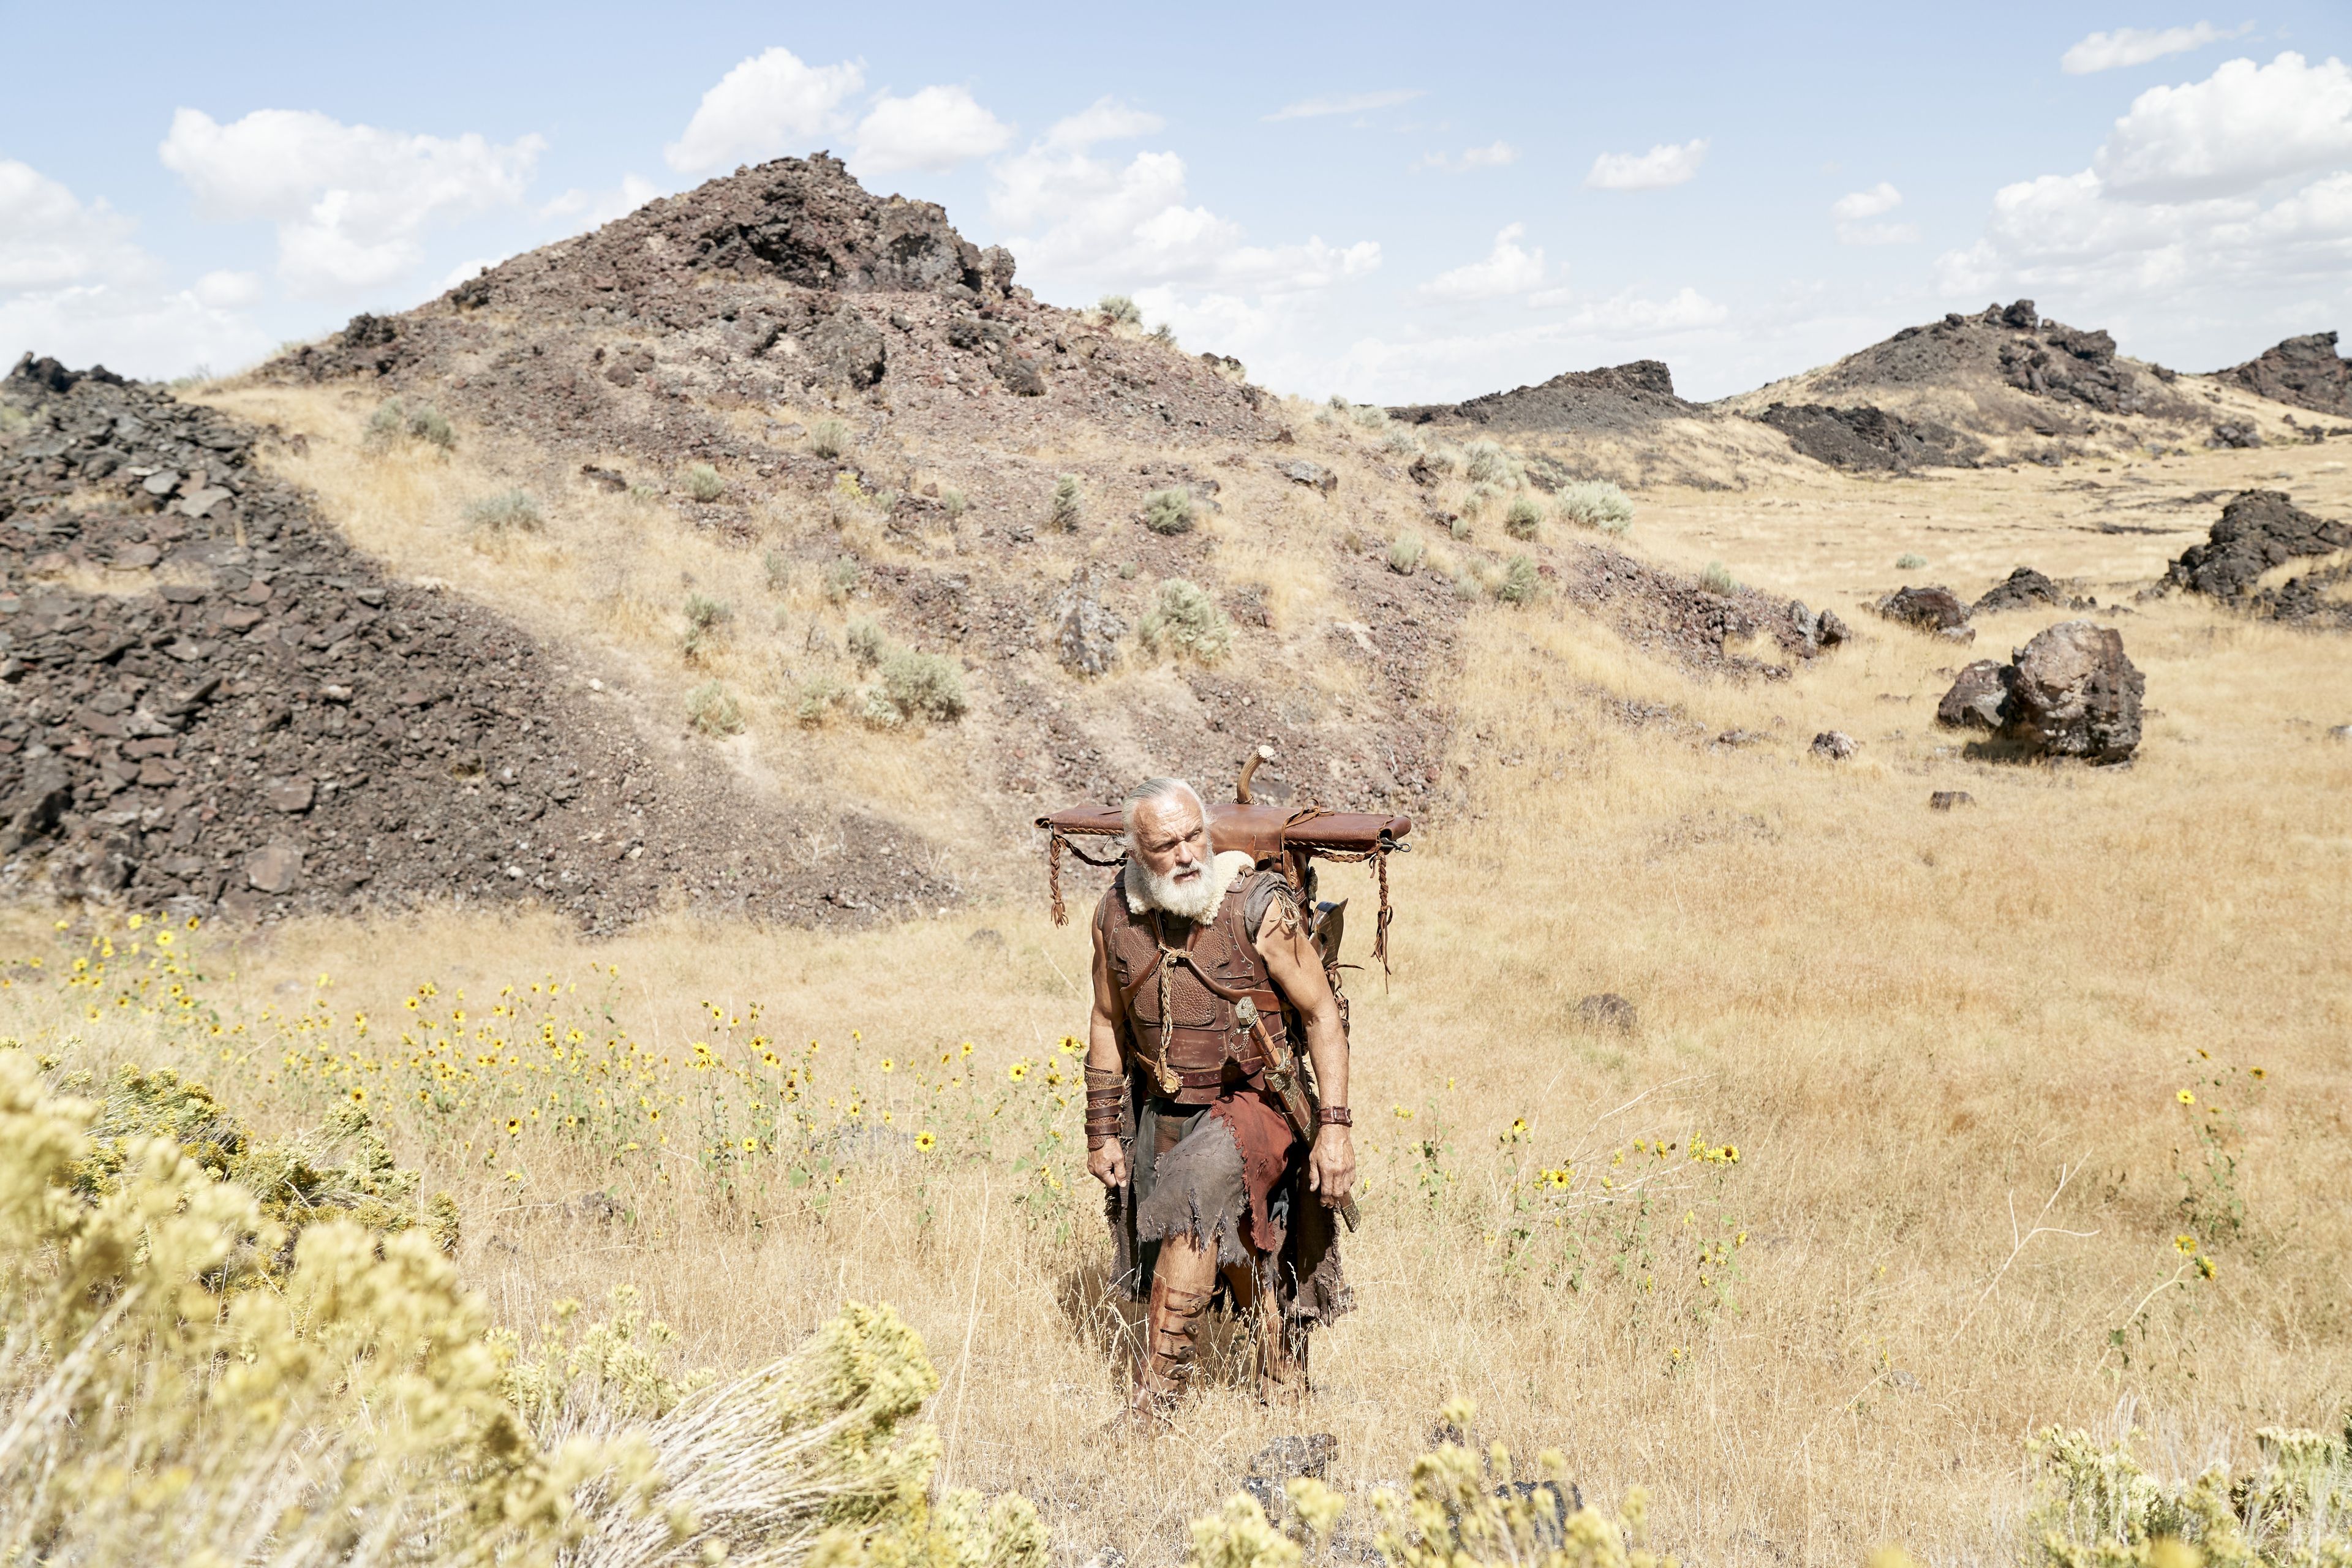 Moroni, son of Mormon, travels through the wilderness.